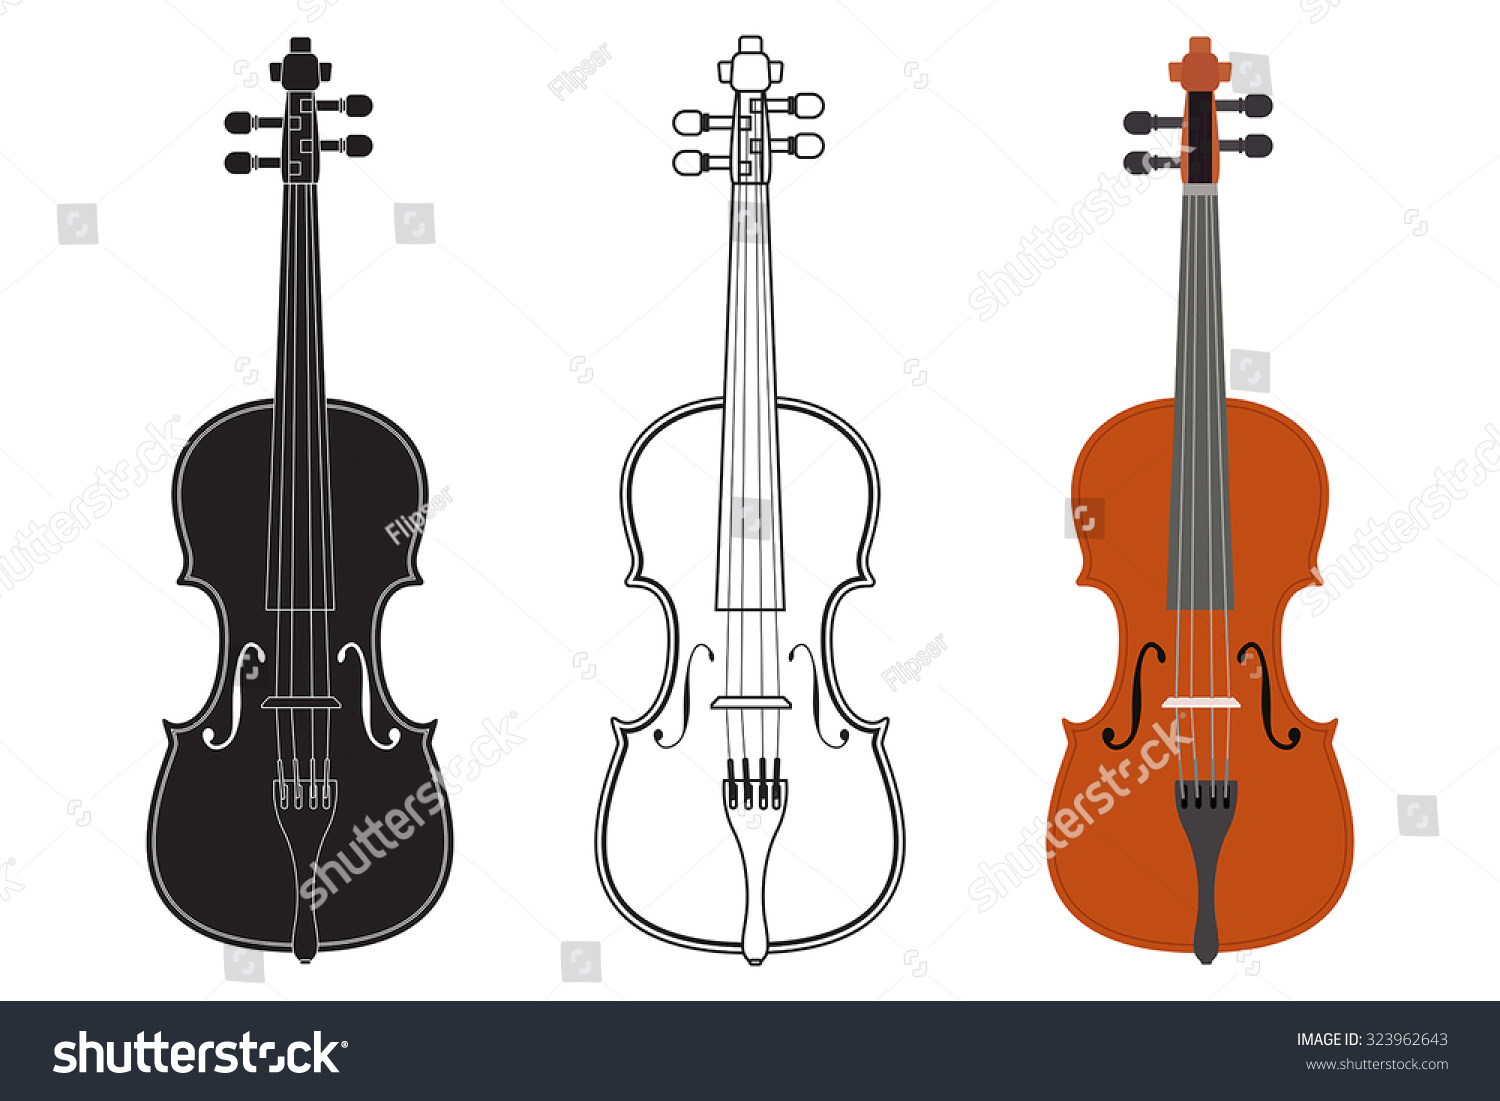 Violin Vector Isolated On White Stock Vector 323962643 - Shutterstock